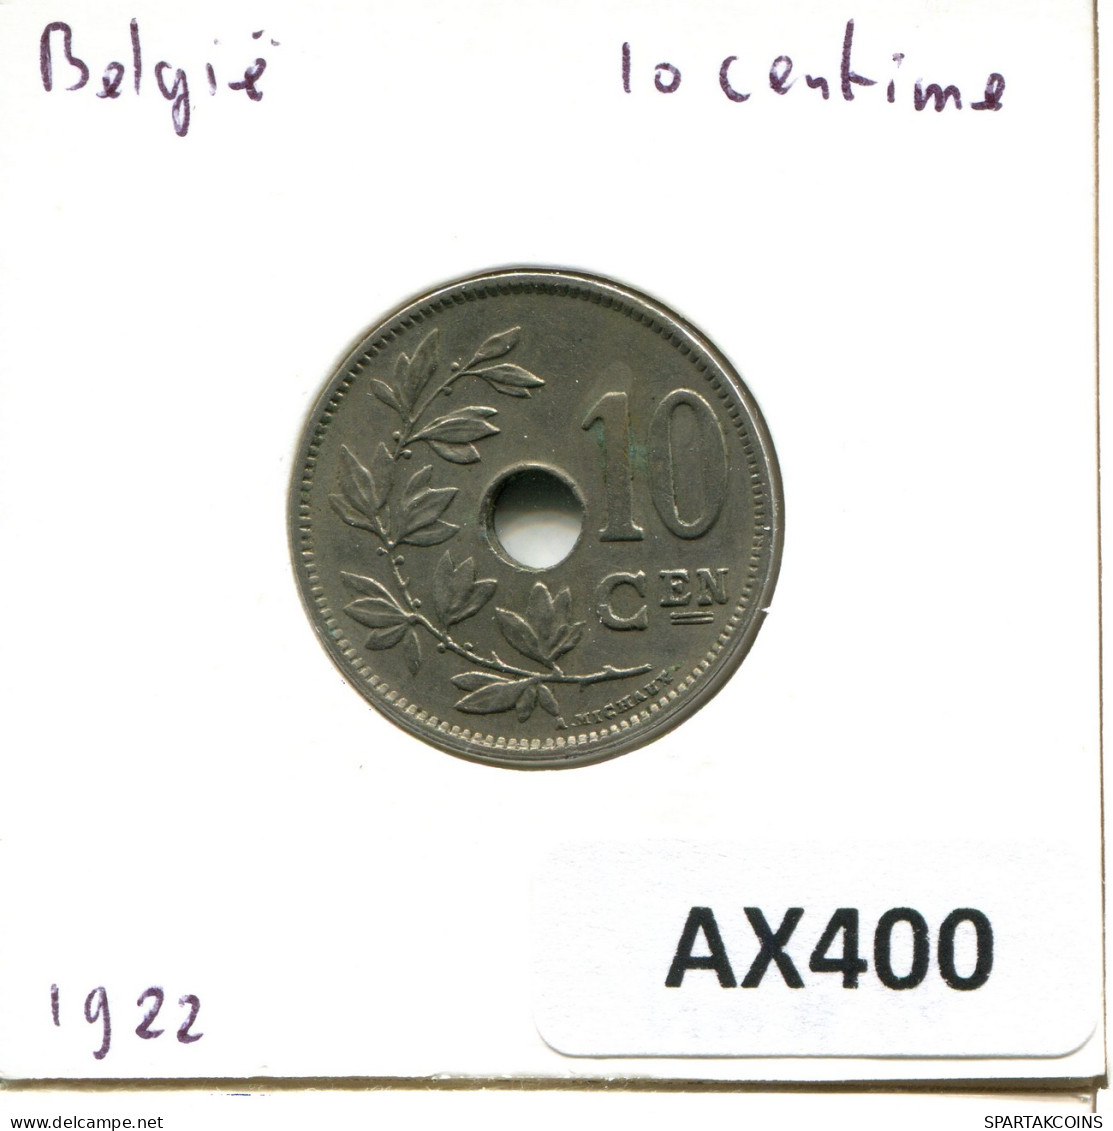 10 CENTIMES 1922 BELGIUM Coin DUTCH Text #AX400.U - 10 Centimes